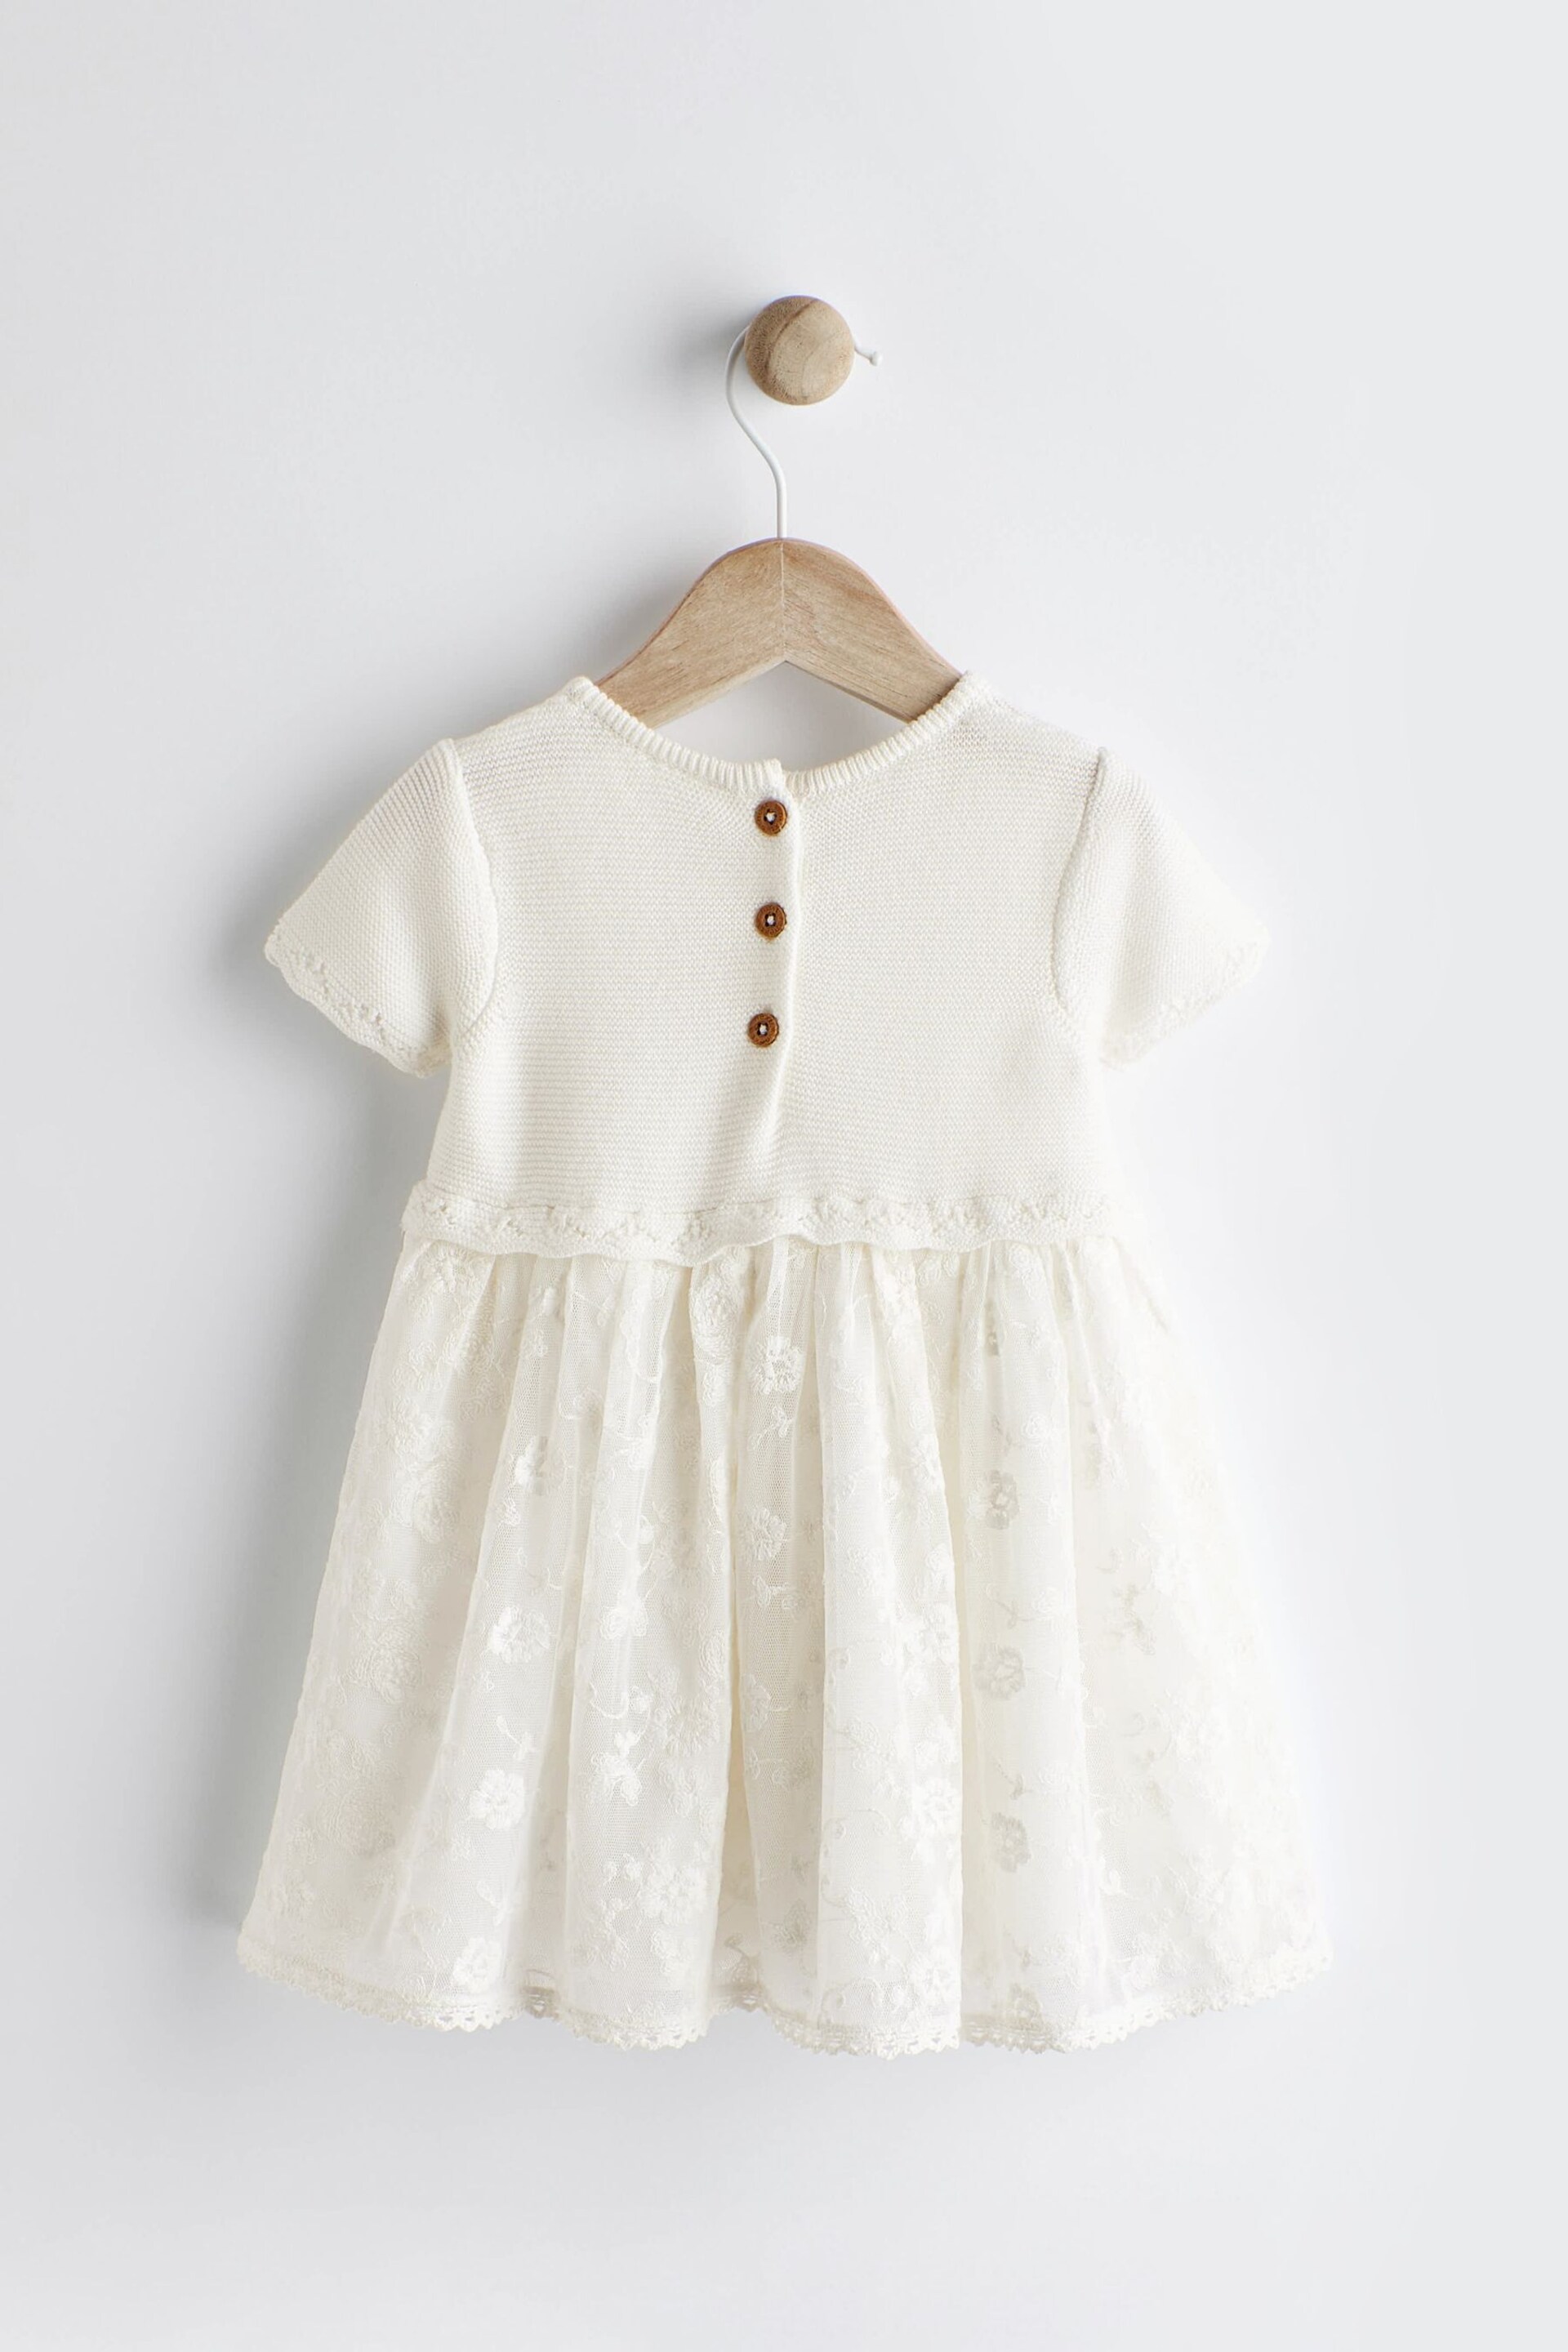 Ecru Occasion Baby Dress (0mths-2yrs) - Image 2 of 6